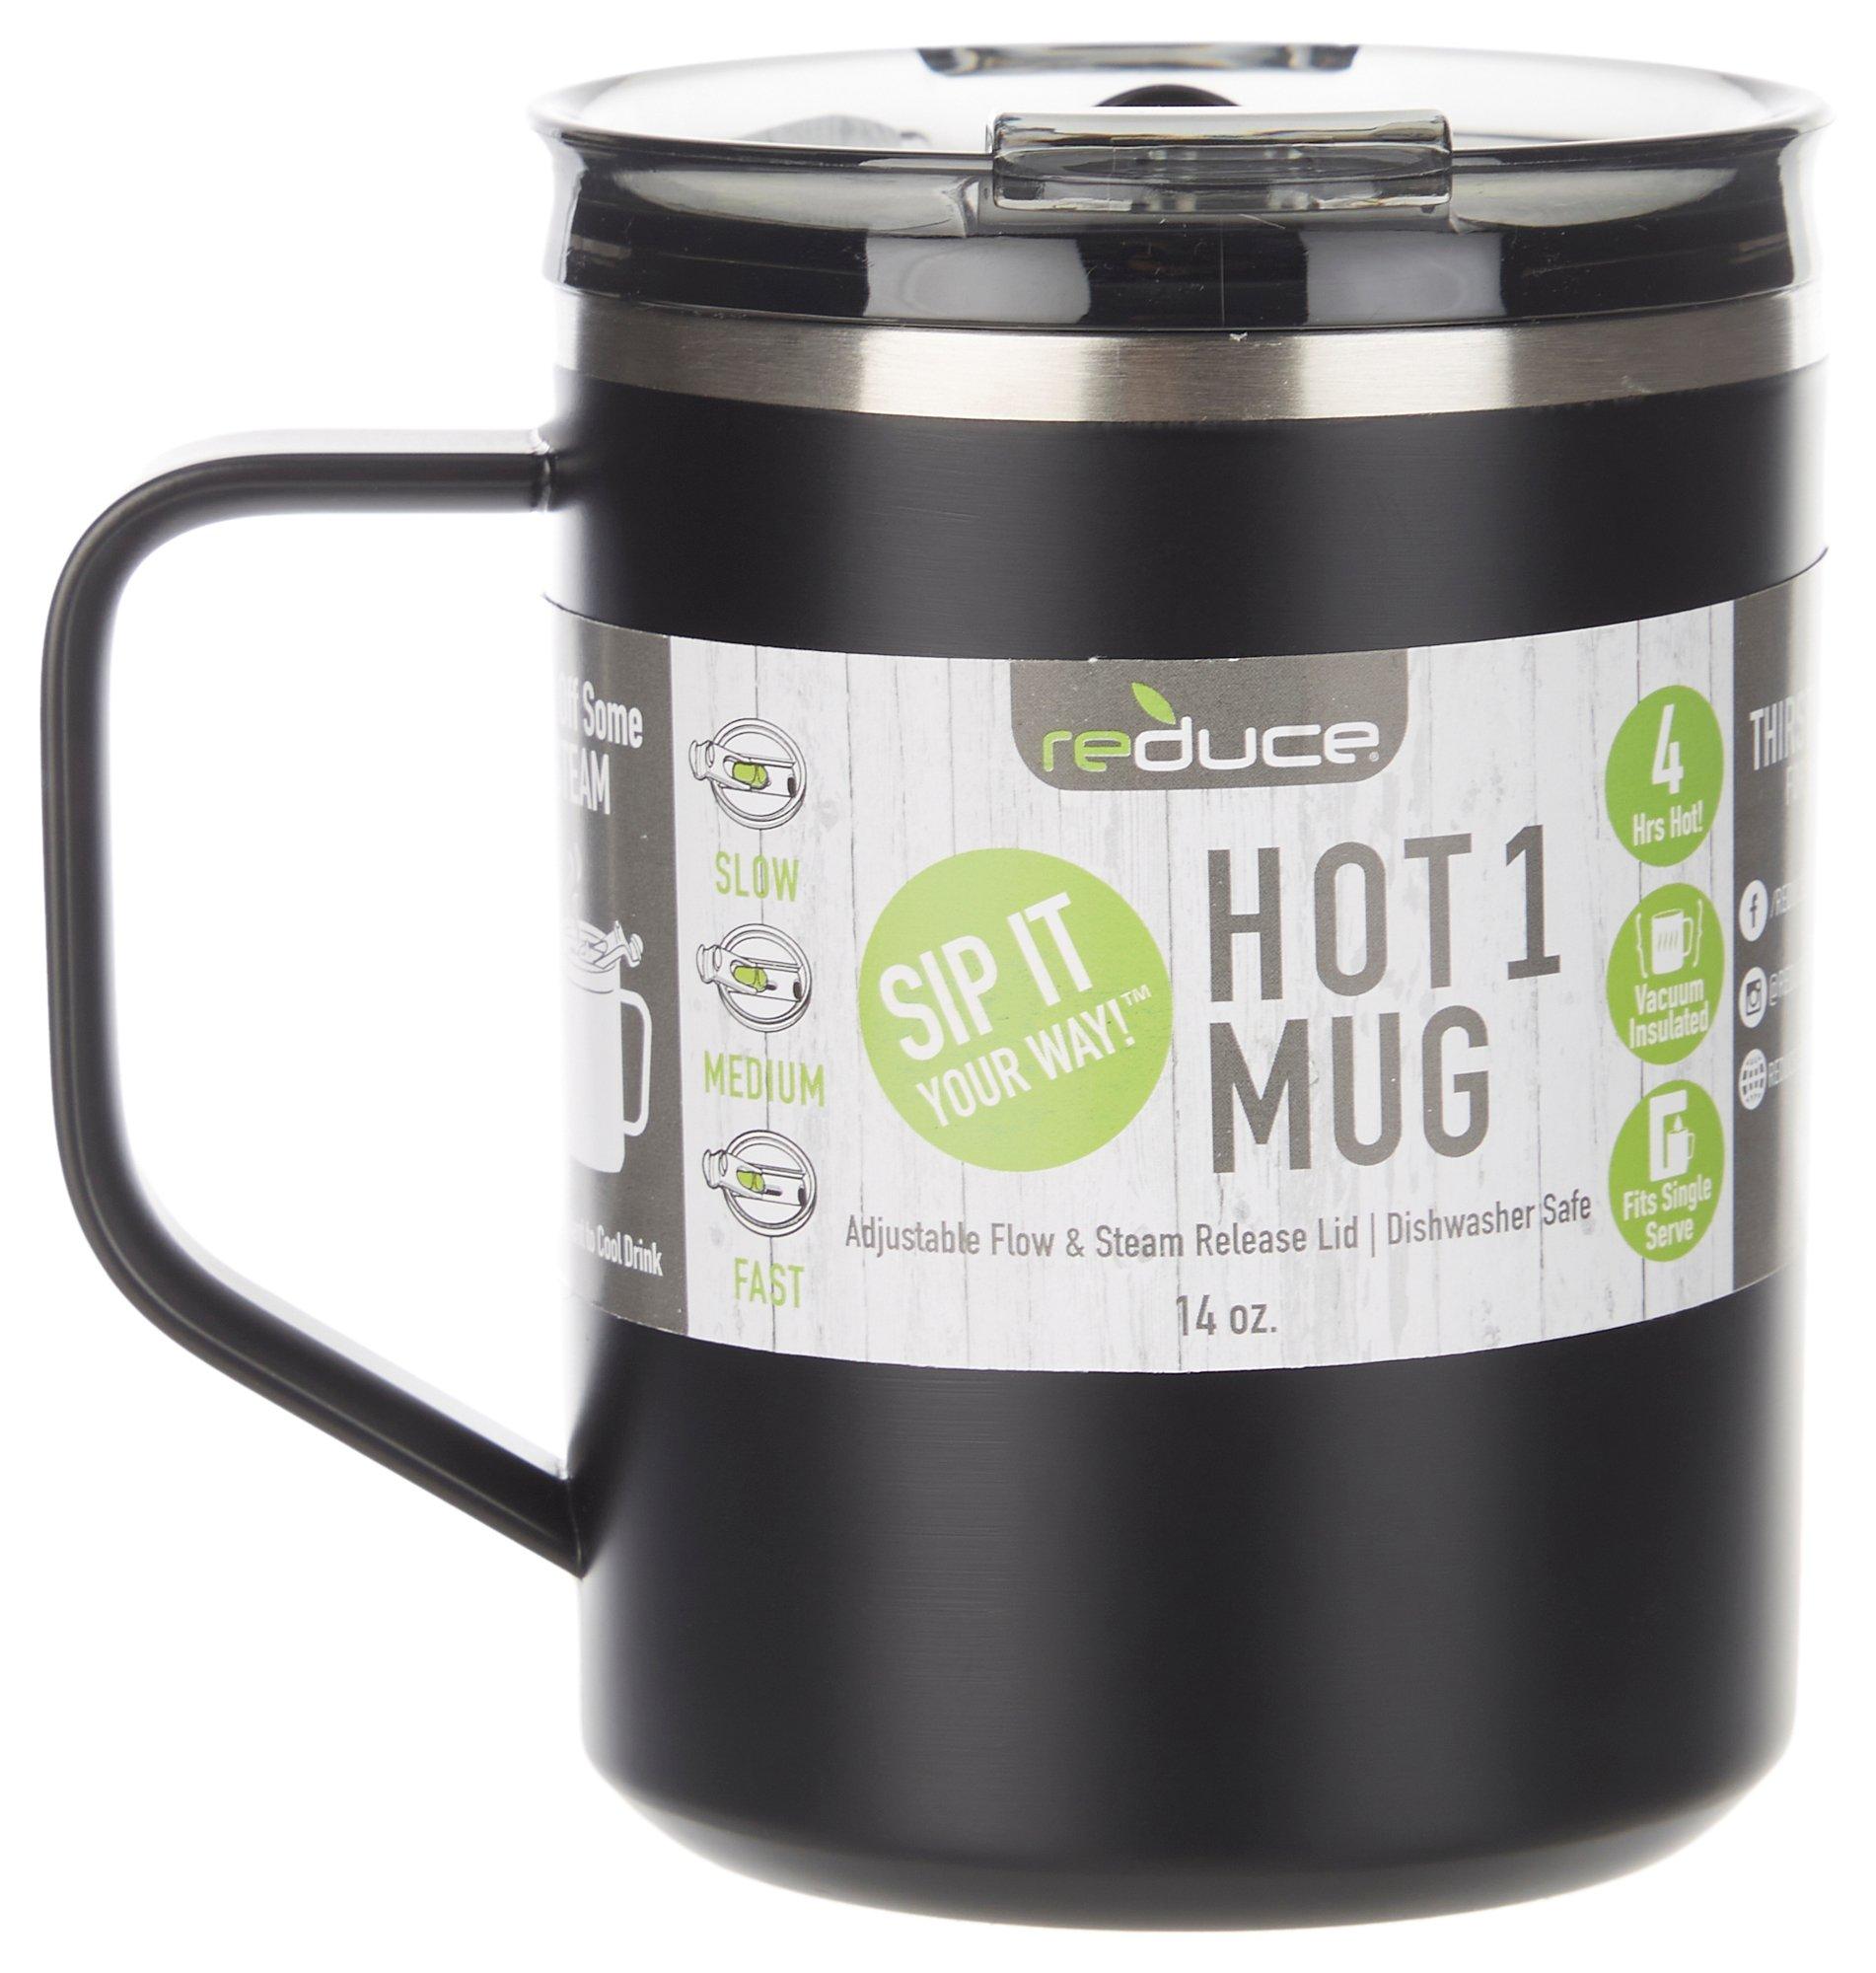 Hot1 Mug 24 oz